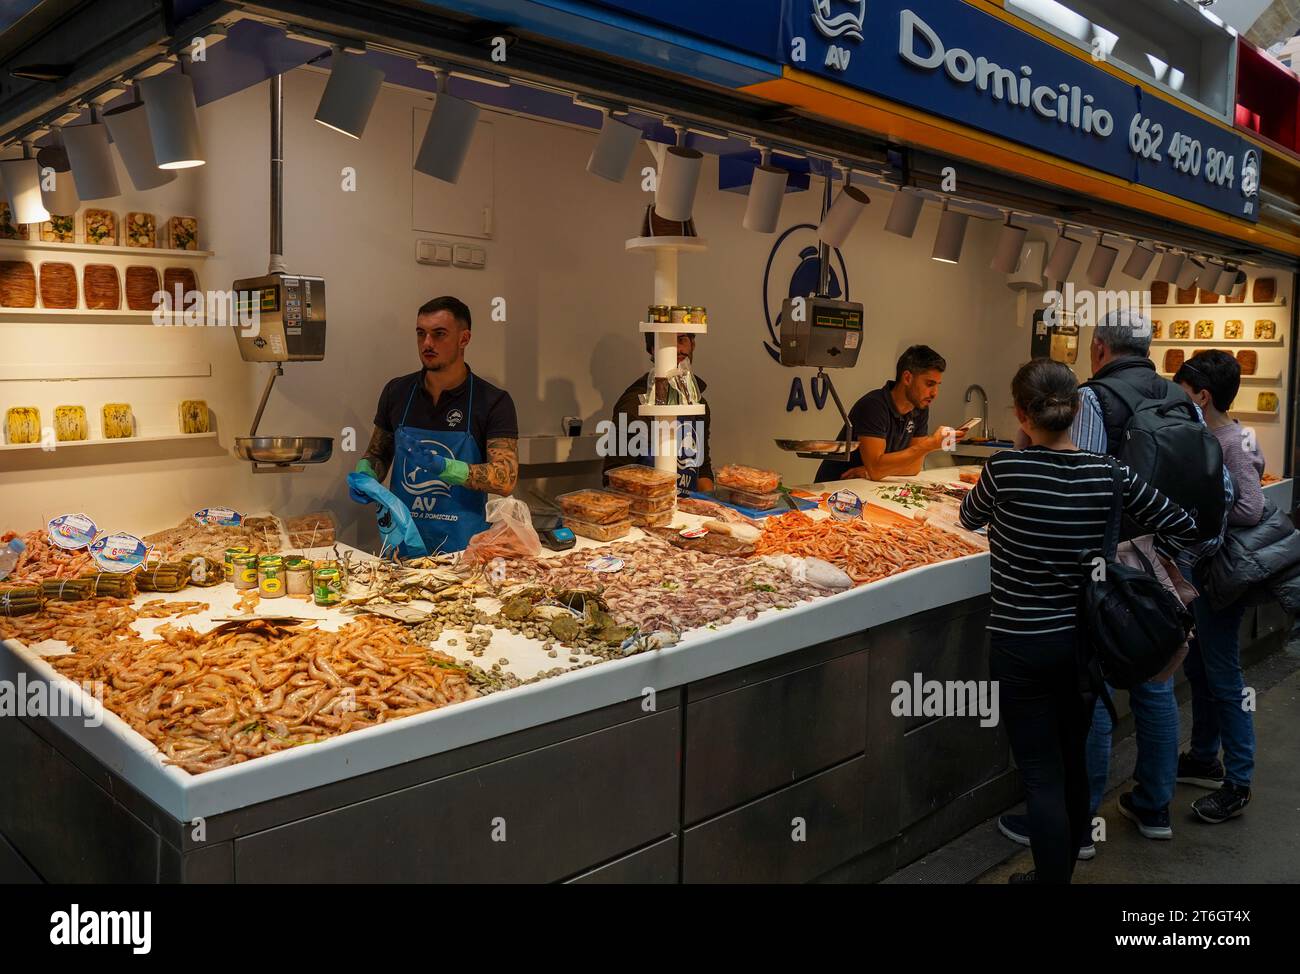 Malaga Espagne. Mercado Atarazanas, marchés couverts vendant des fruits de mer à Malaga, Andalousie, Espagne. Banque D'Images